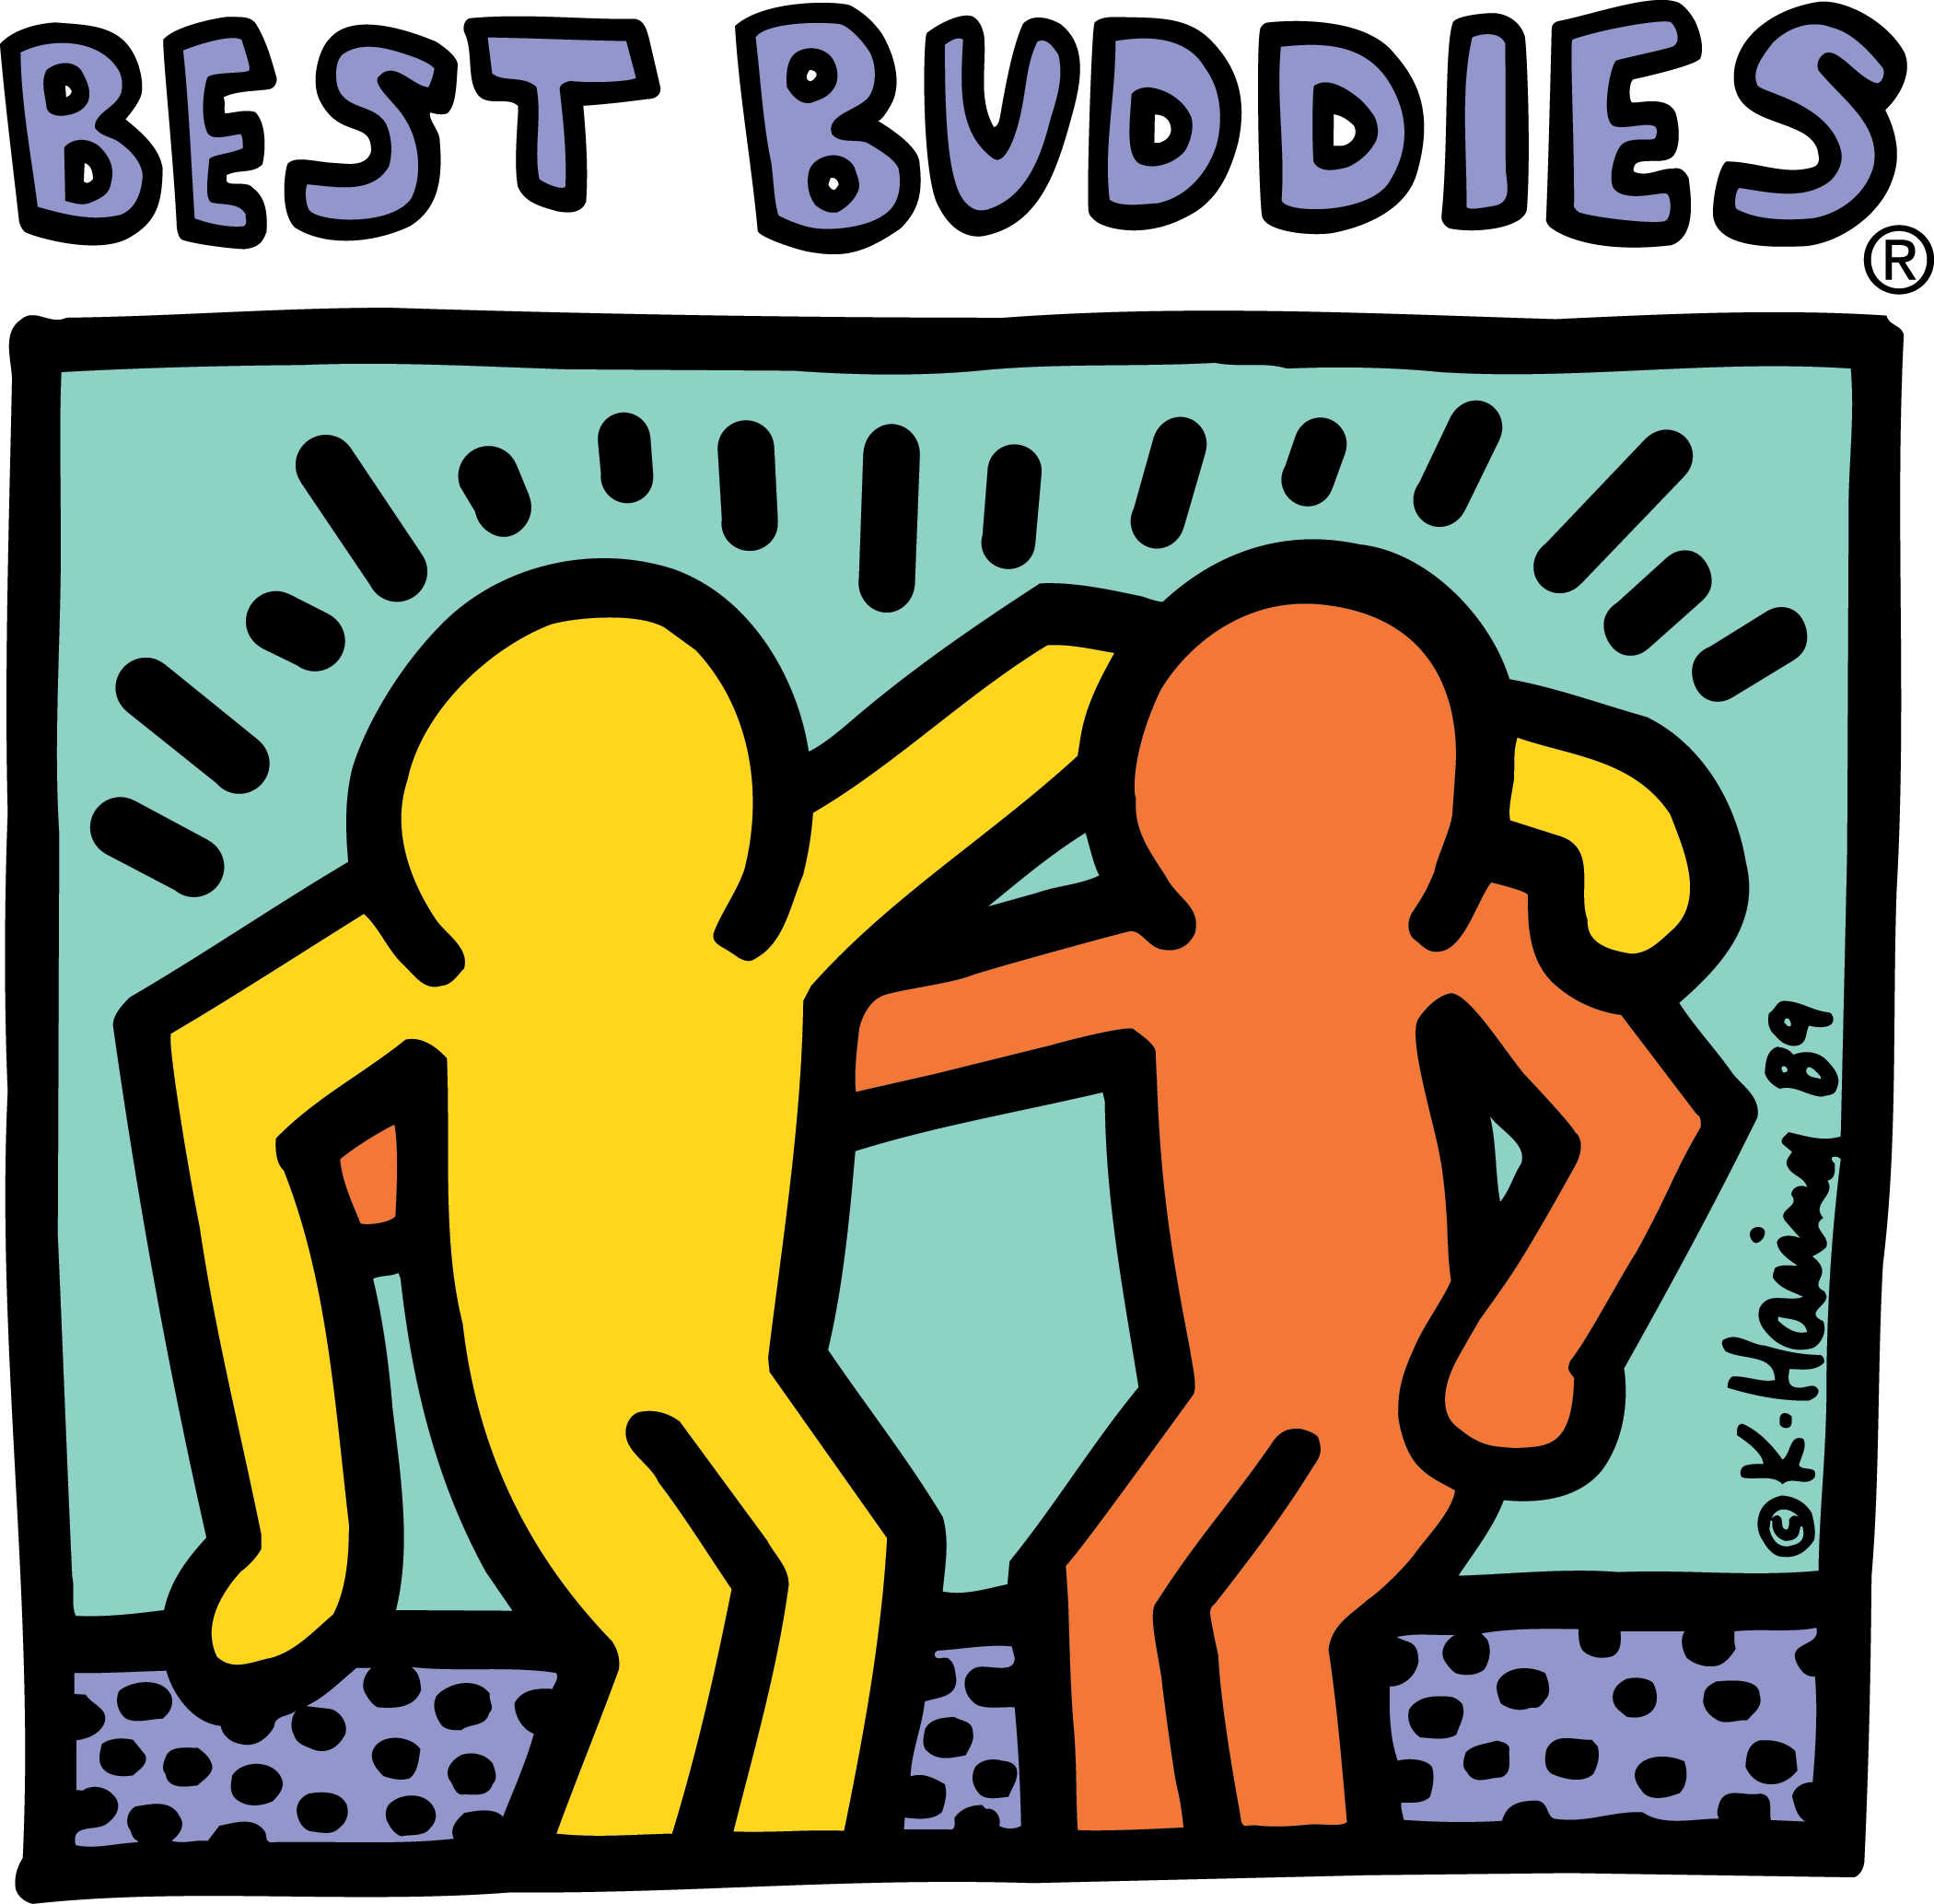 Buddies Logo - Best Buddies Logo Color CMYK CVC Paramount Group